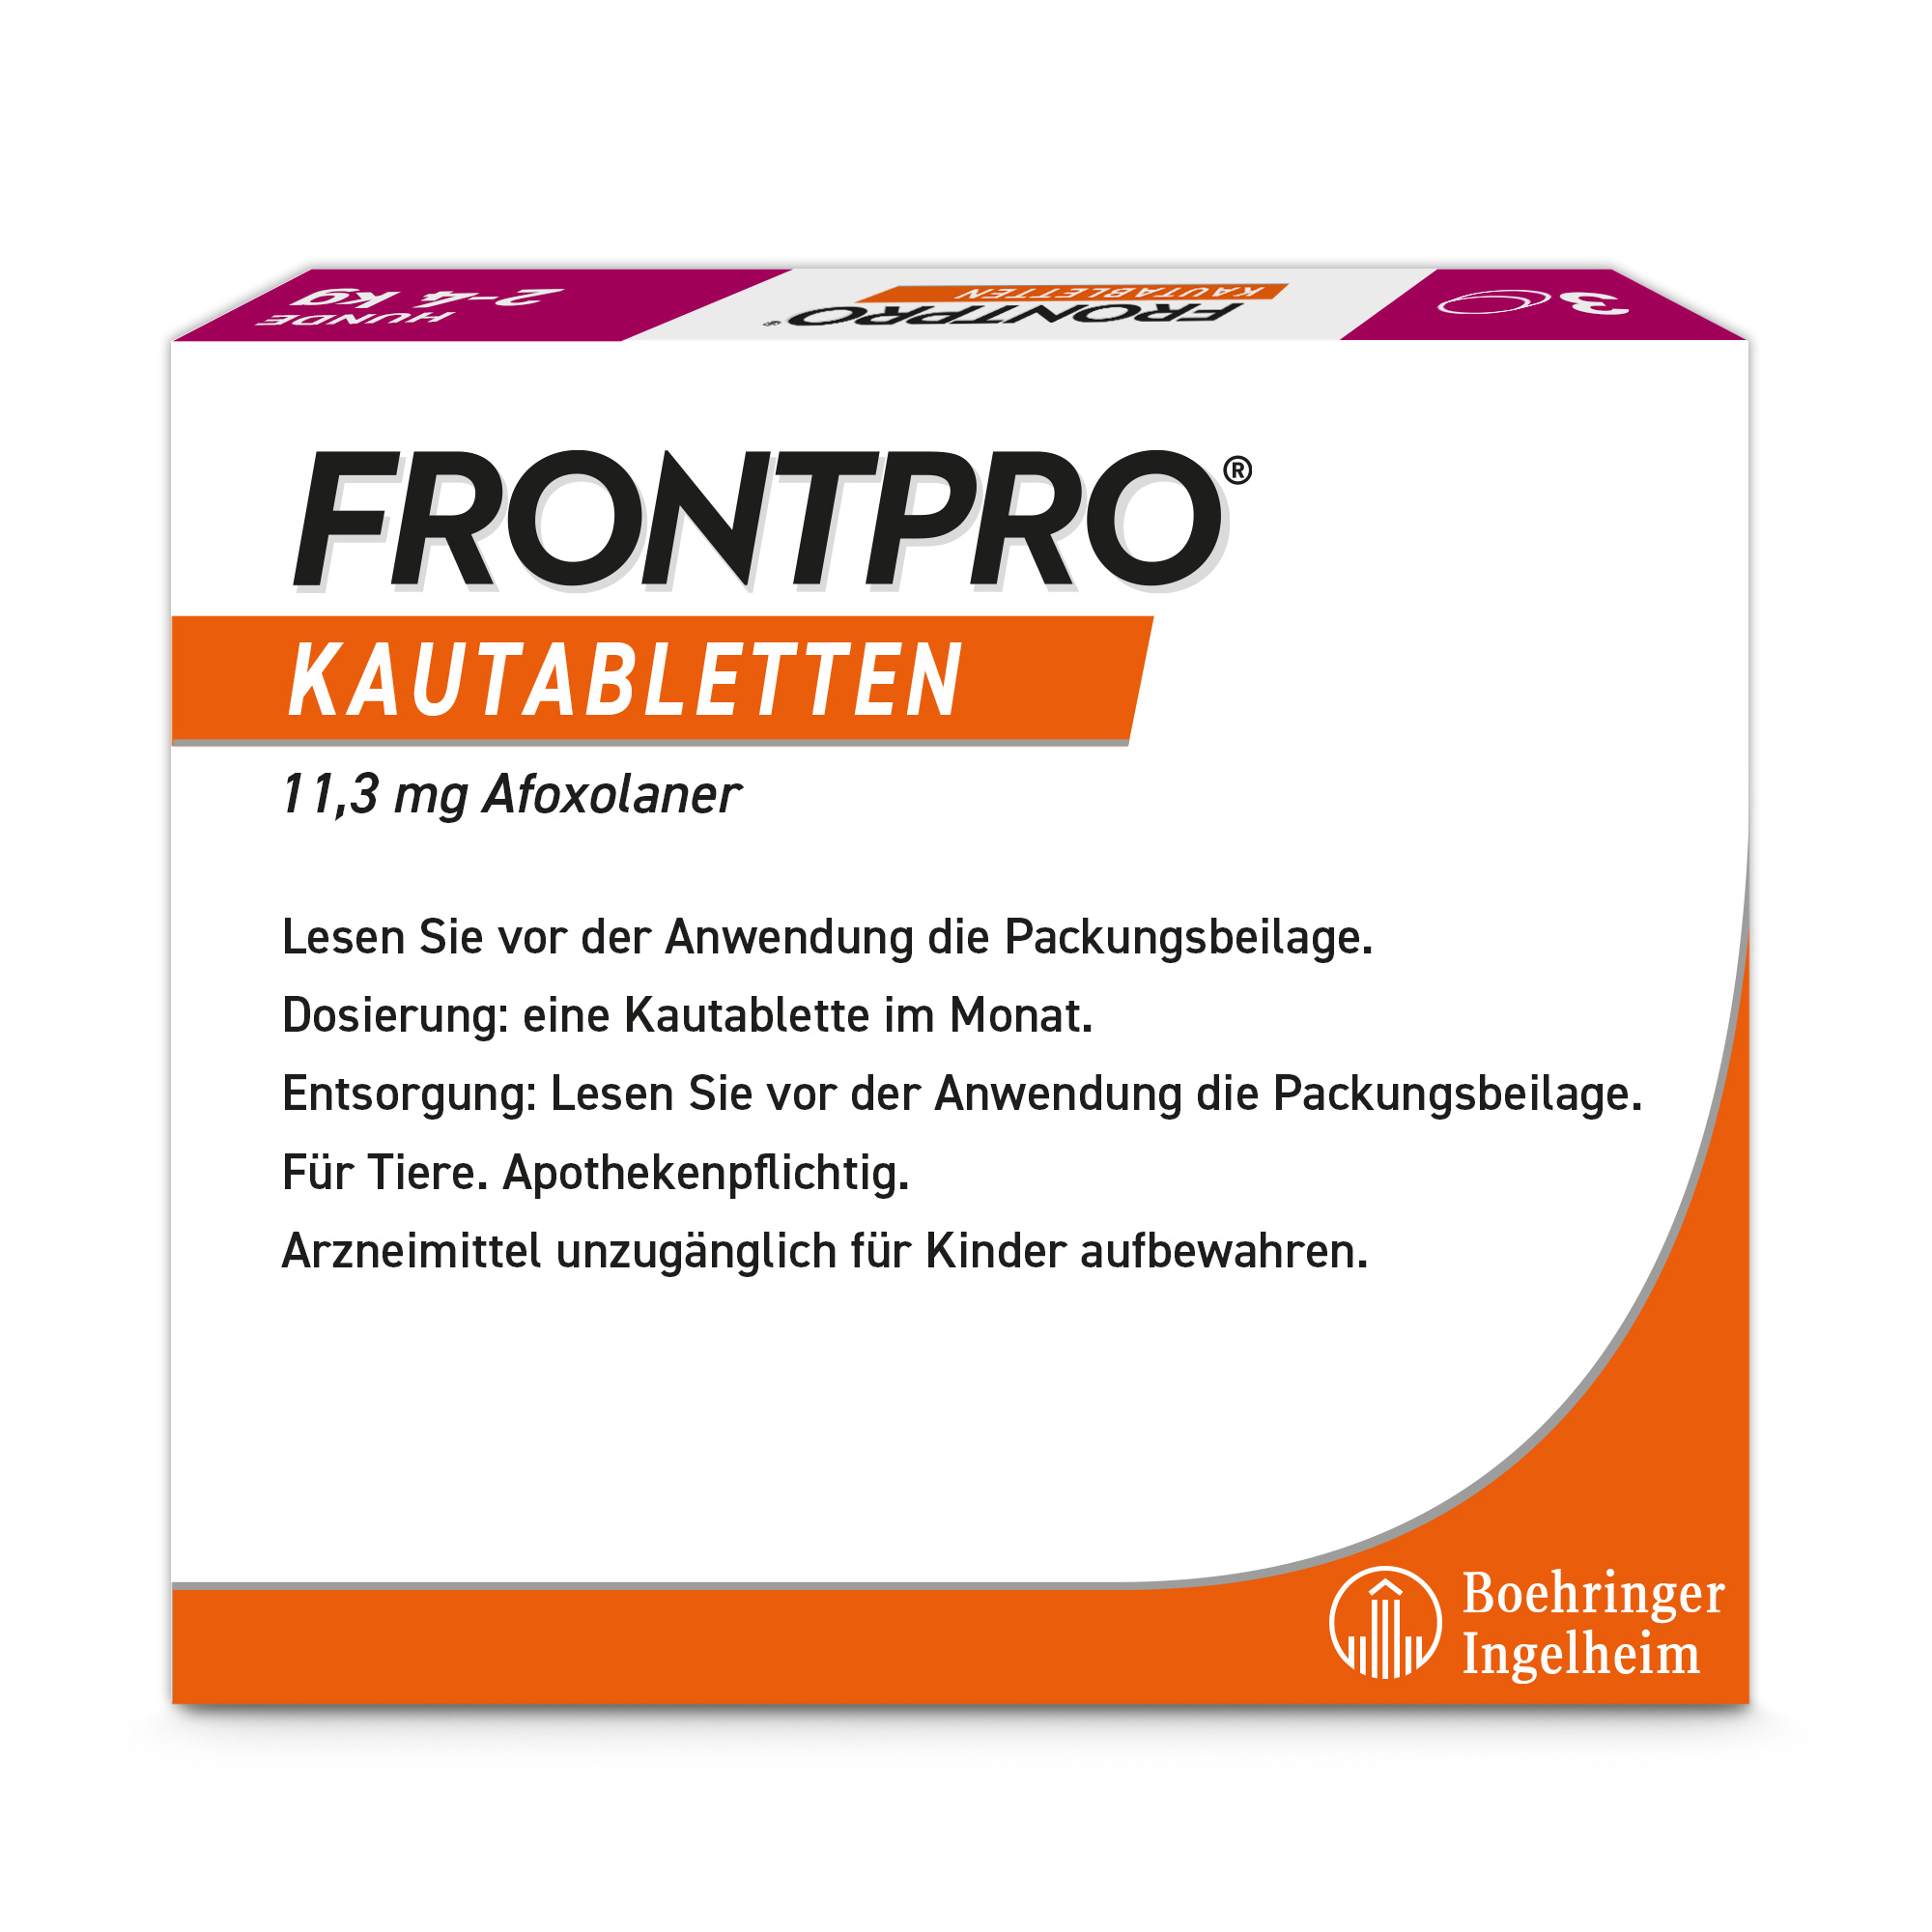 FRONTPRO S Deutsche Packung Back